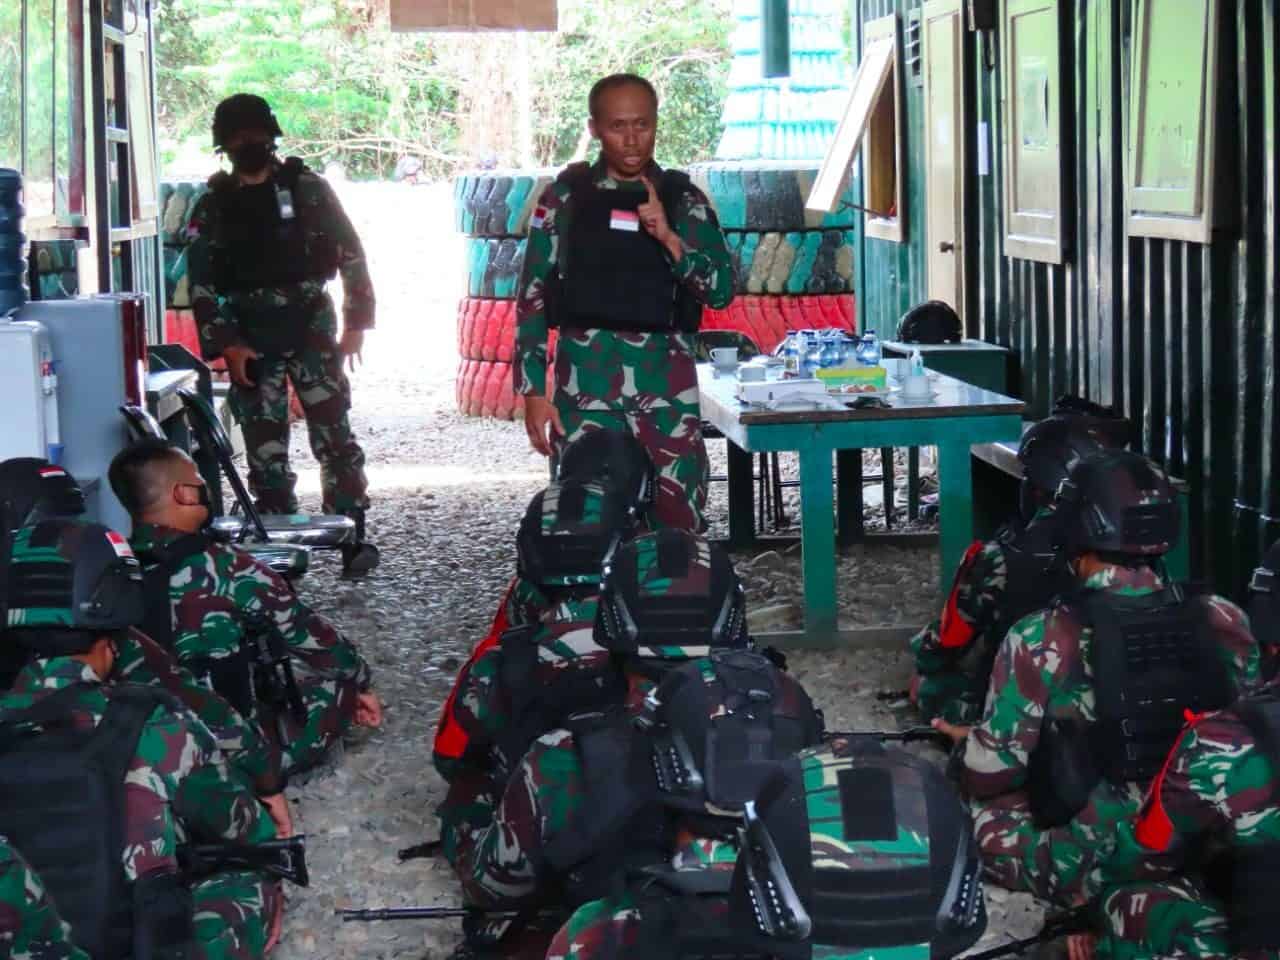 Cek Kesiapan Akomodasi PON XX Dan Satuan TNI Yang Betrugas, Pangdam XVII/Cenderawasih Kunjungan ke Timika